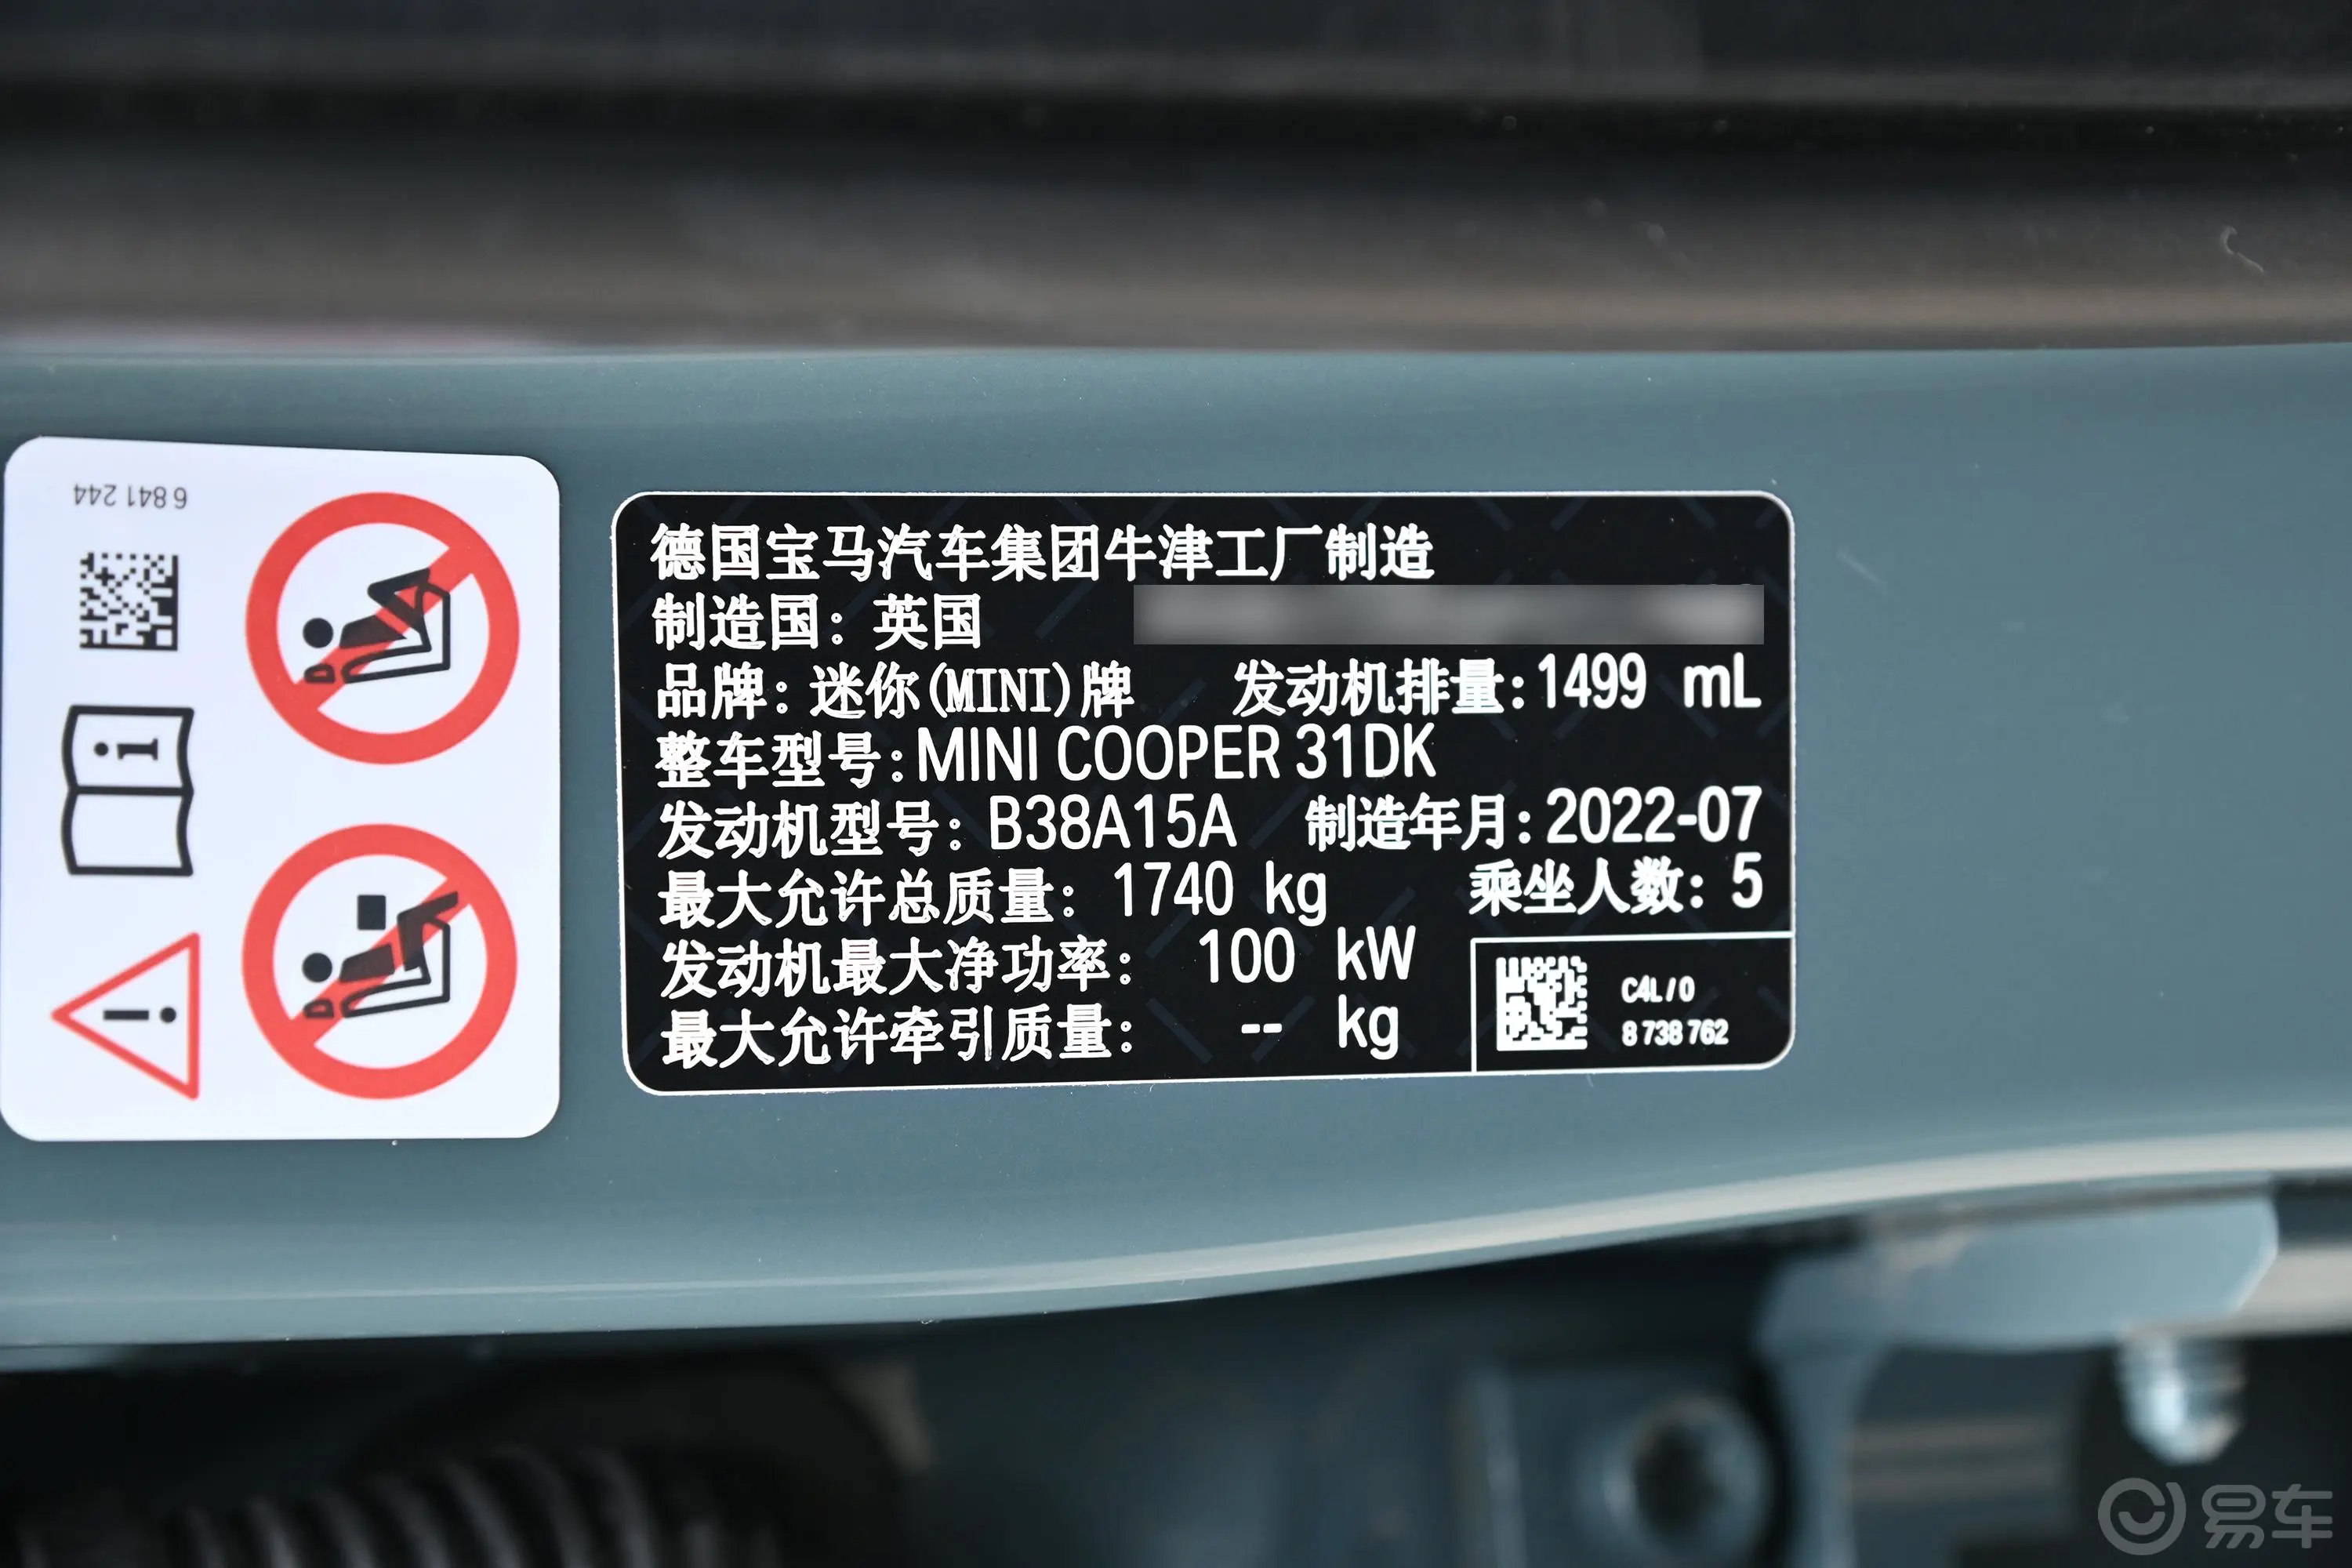 MINI1.5T COOPER 弧光特别版 五门版车辆信息铭牌